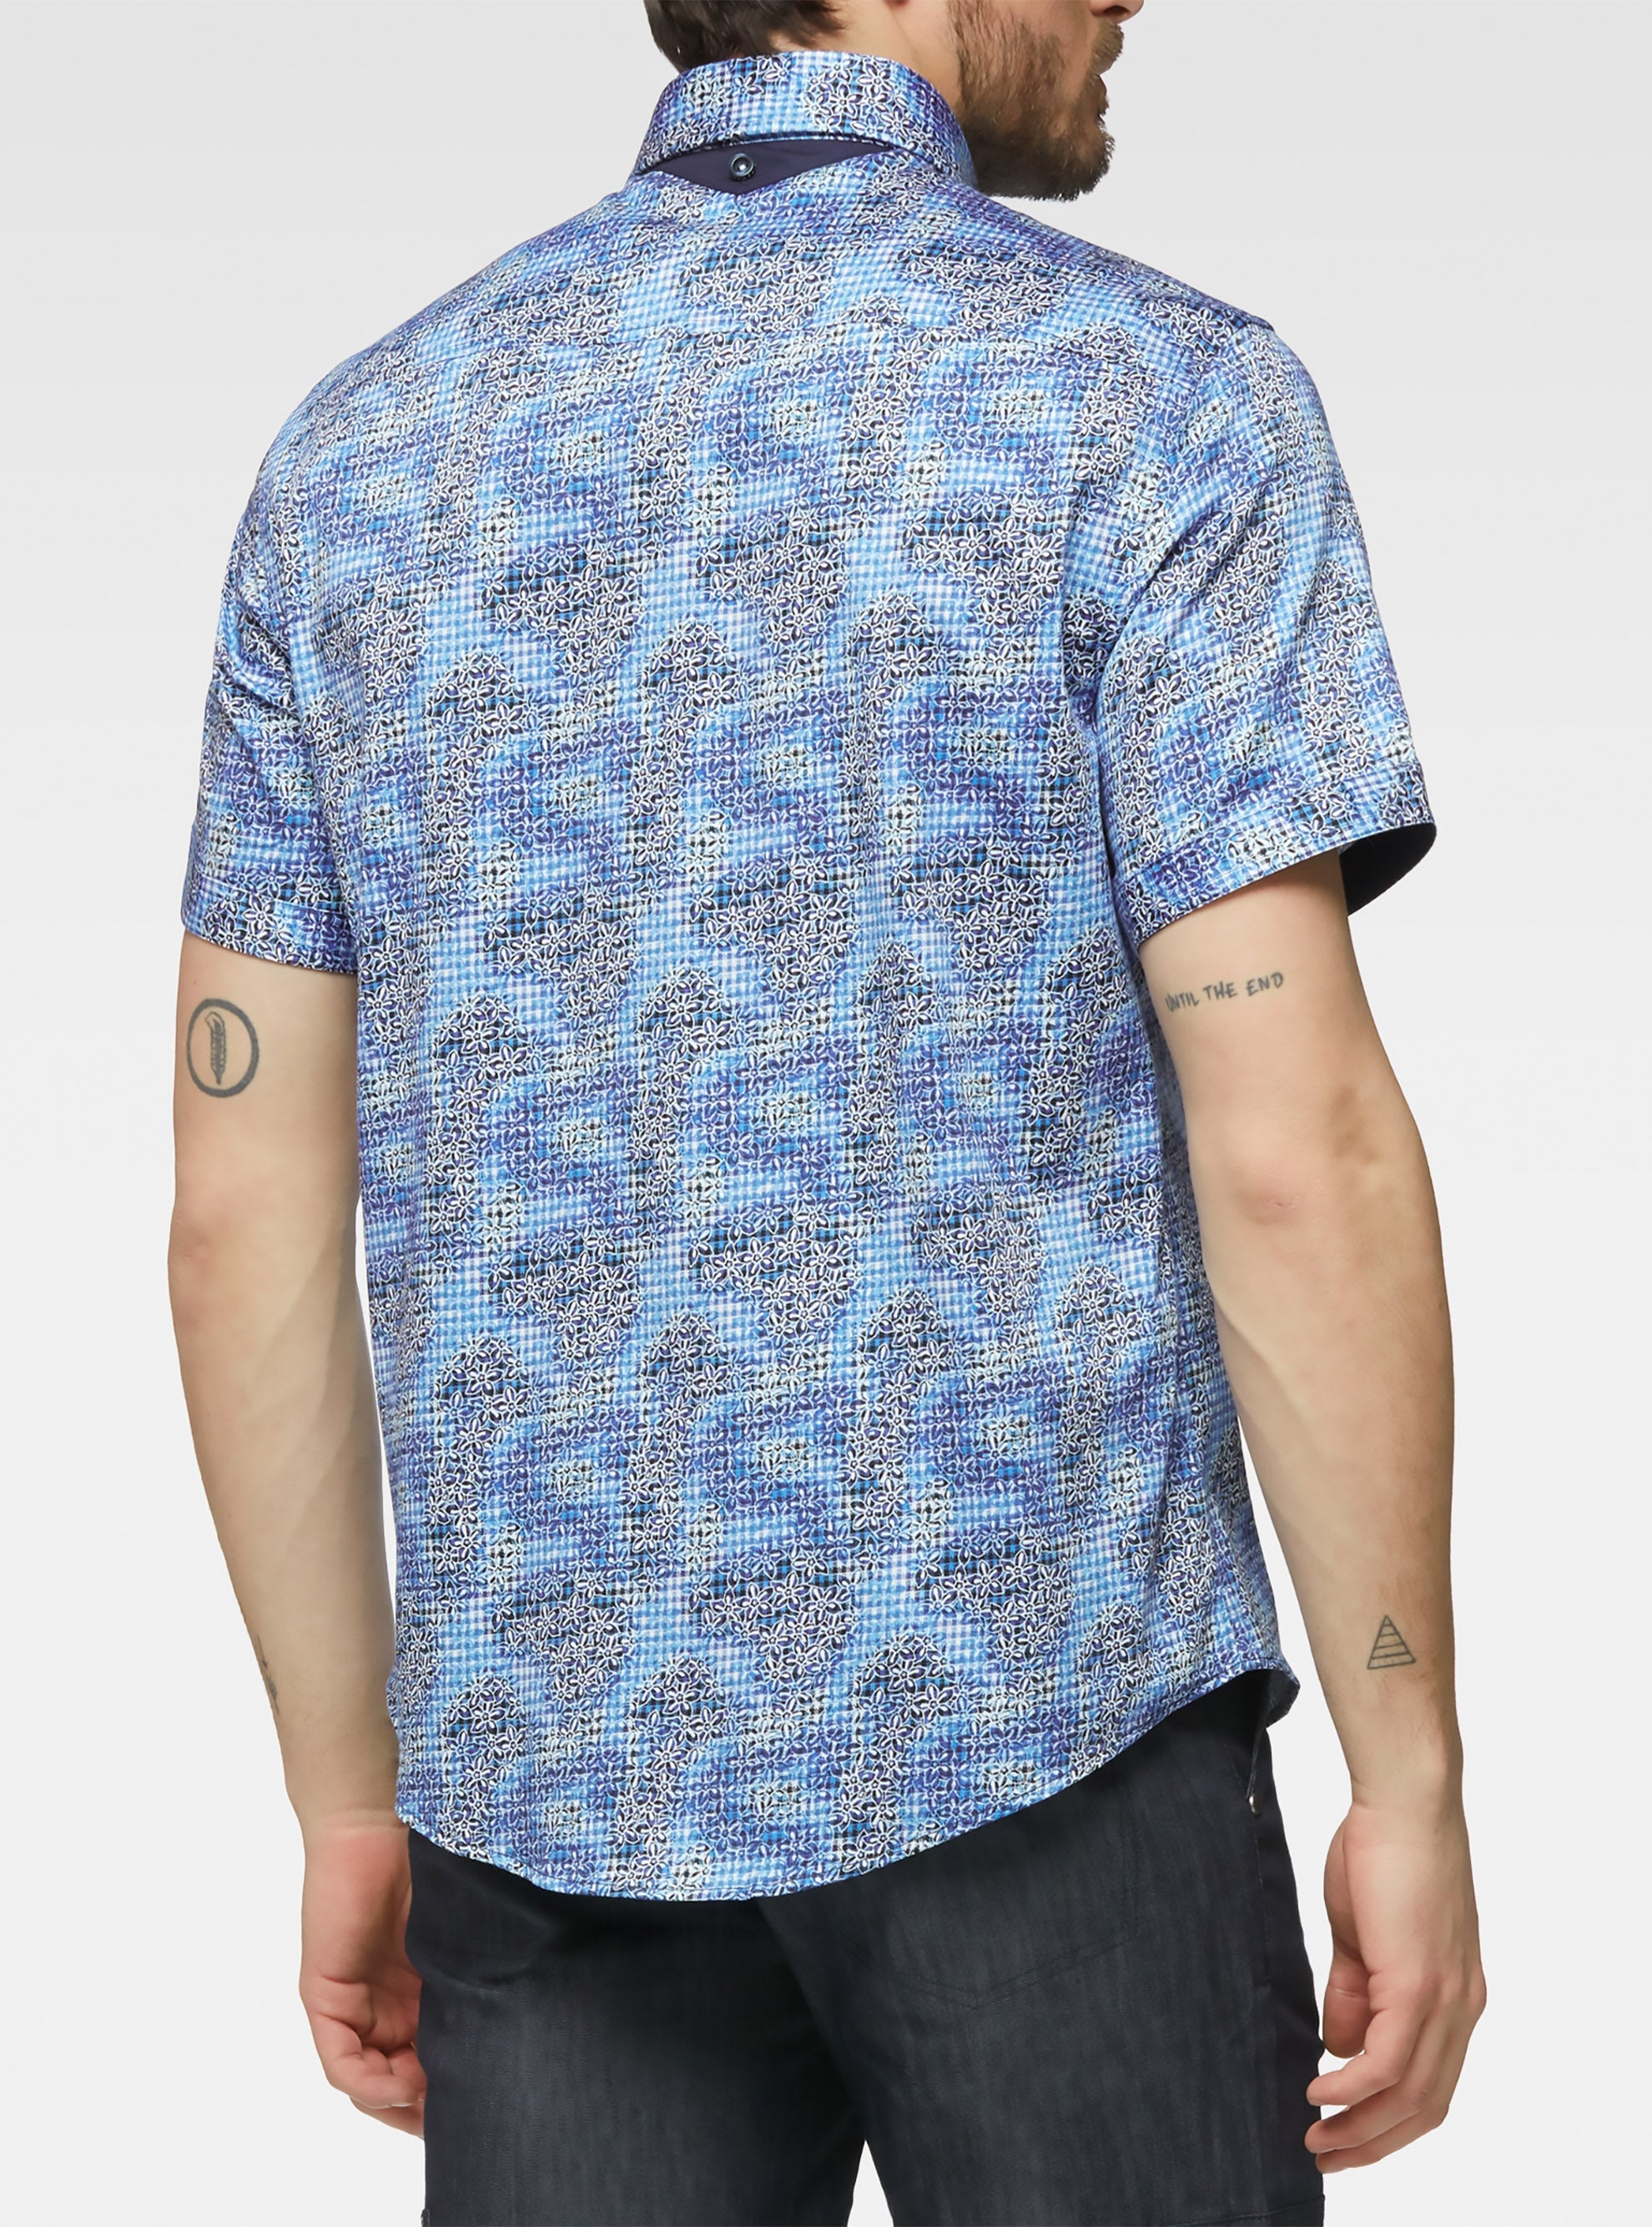 Gingham floral print shirt